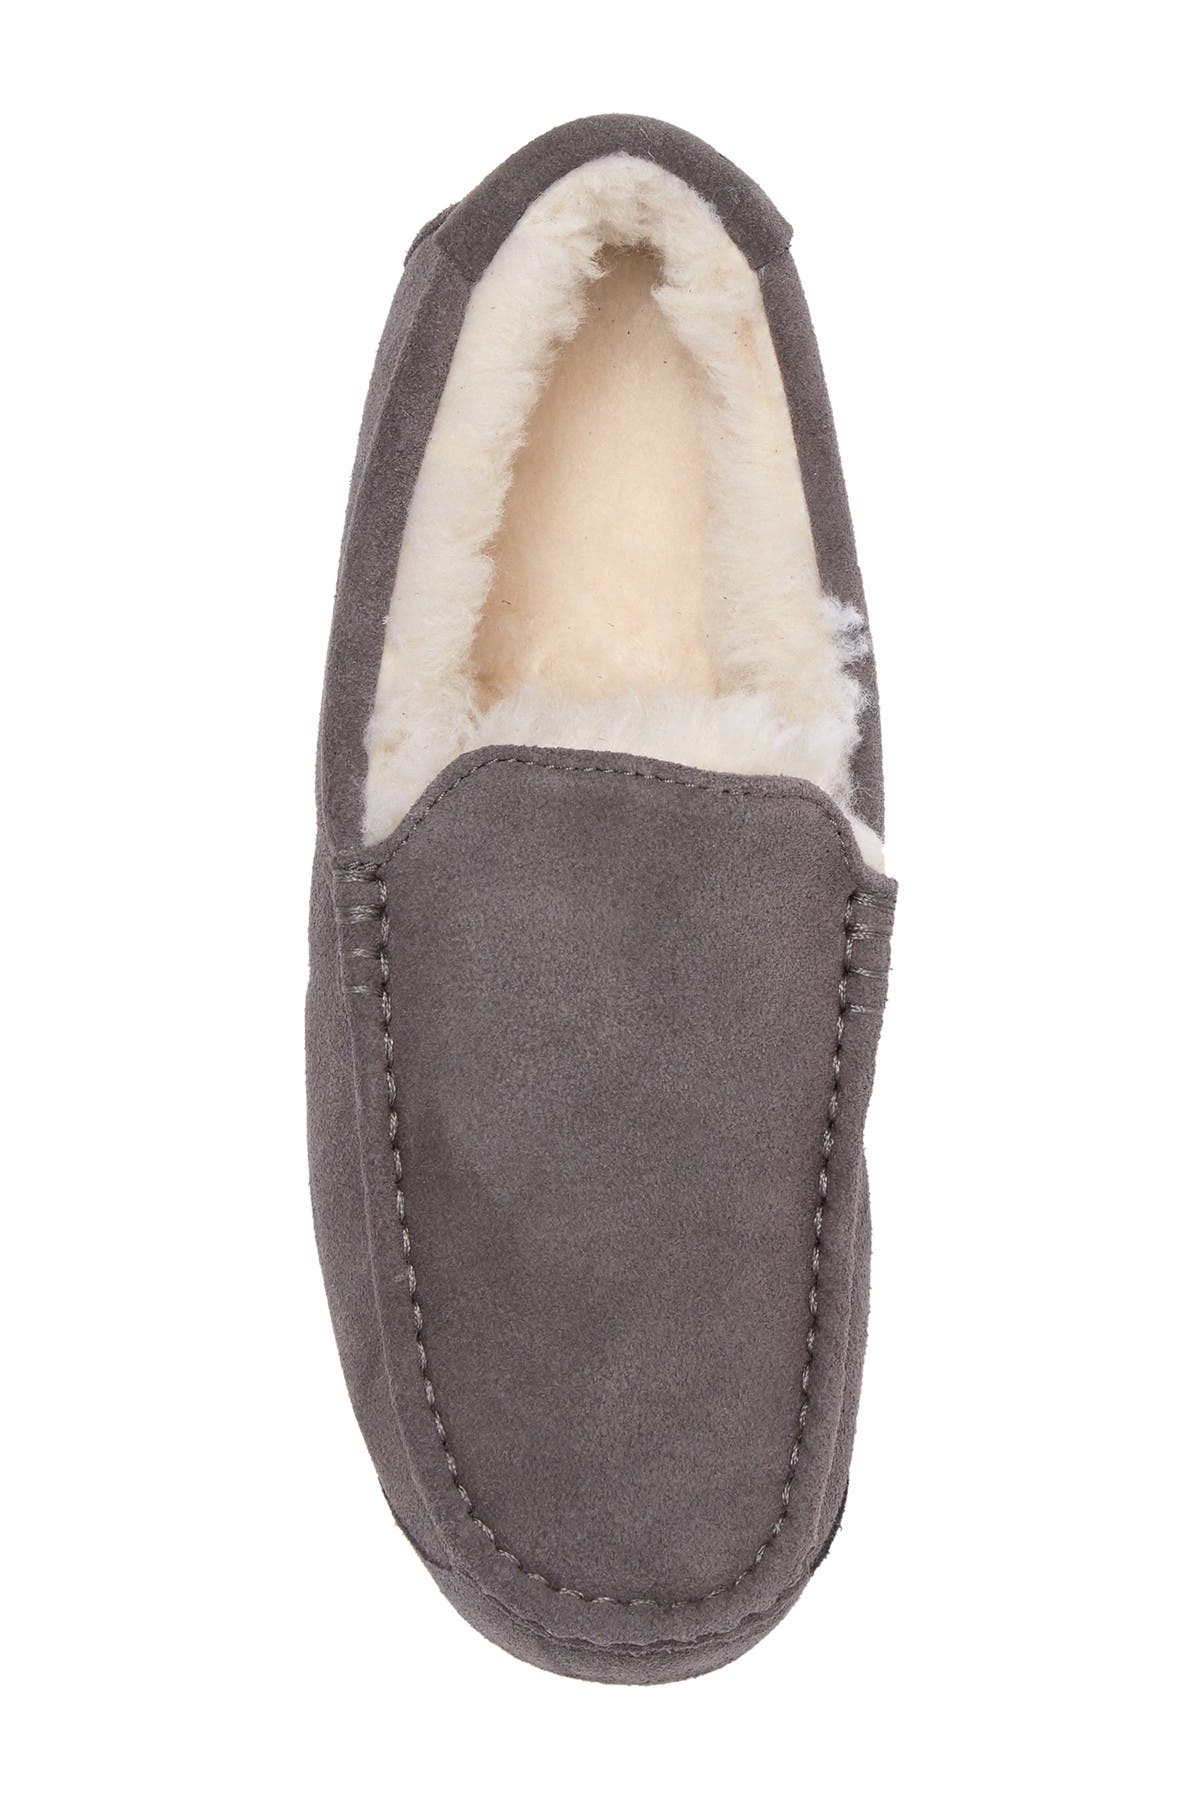 koolaburra by ugg tipton men's slippers